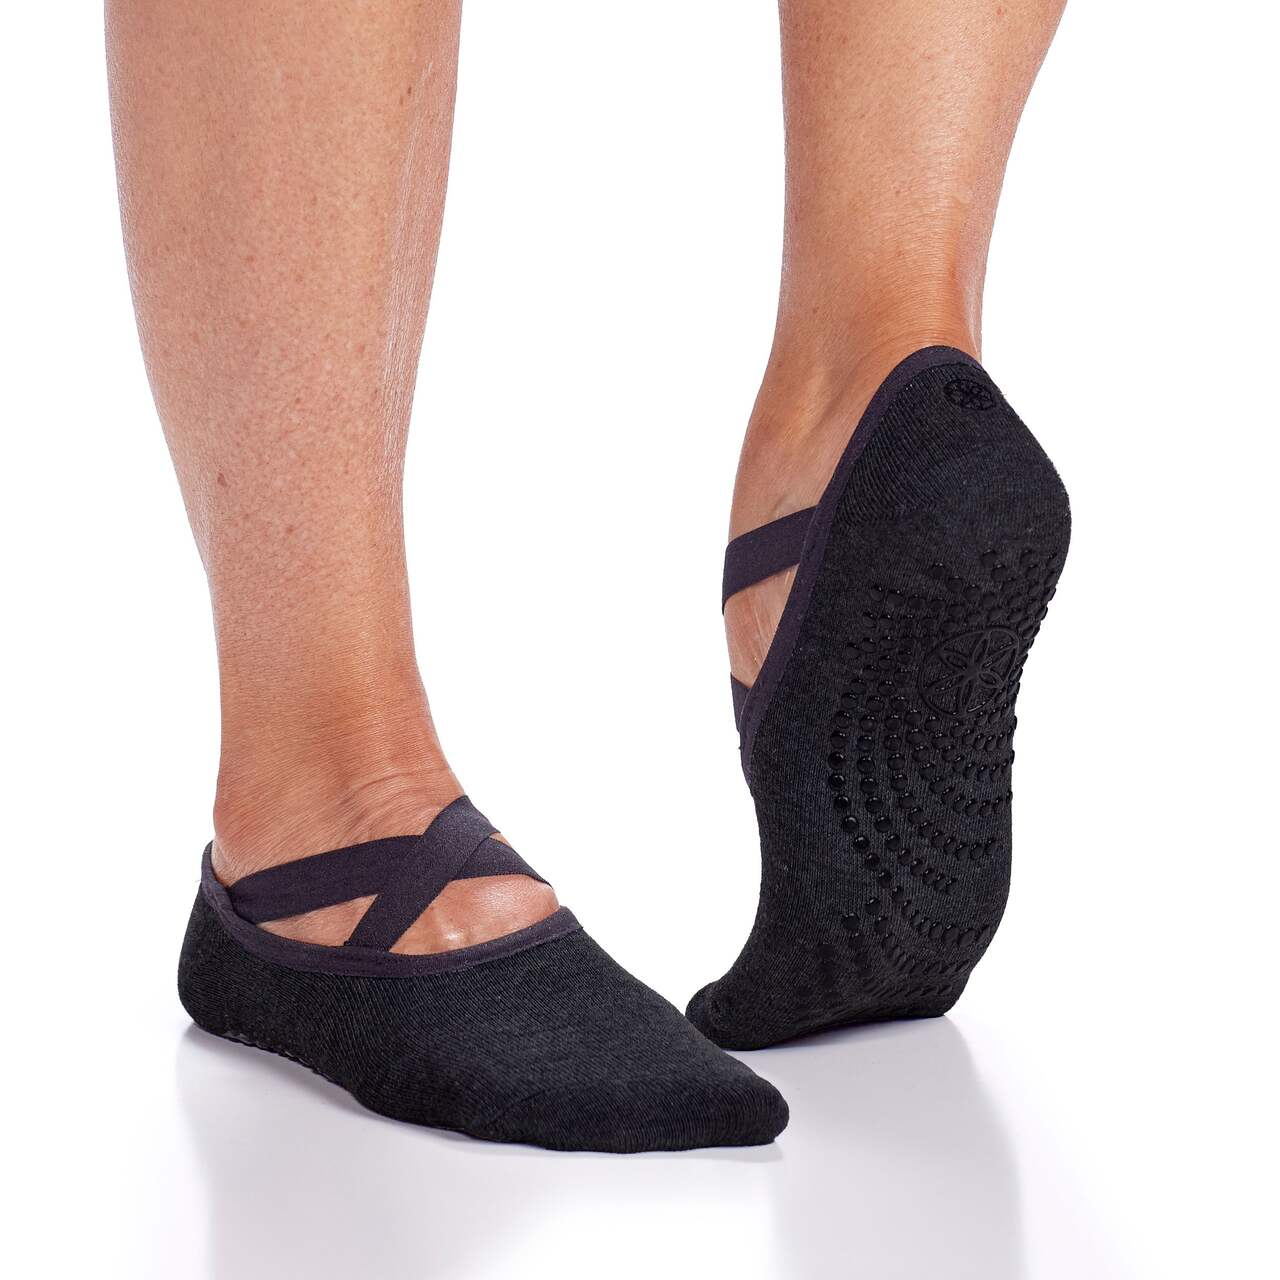 Gaiam Toeless Grippy Socks Black 2pk - Ankle socks